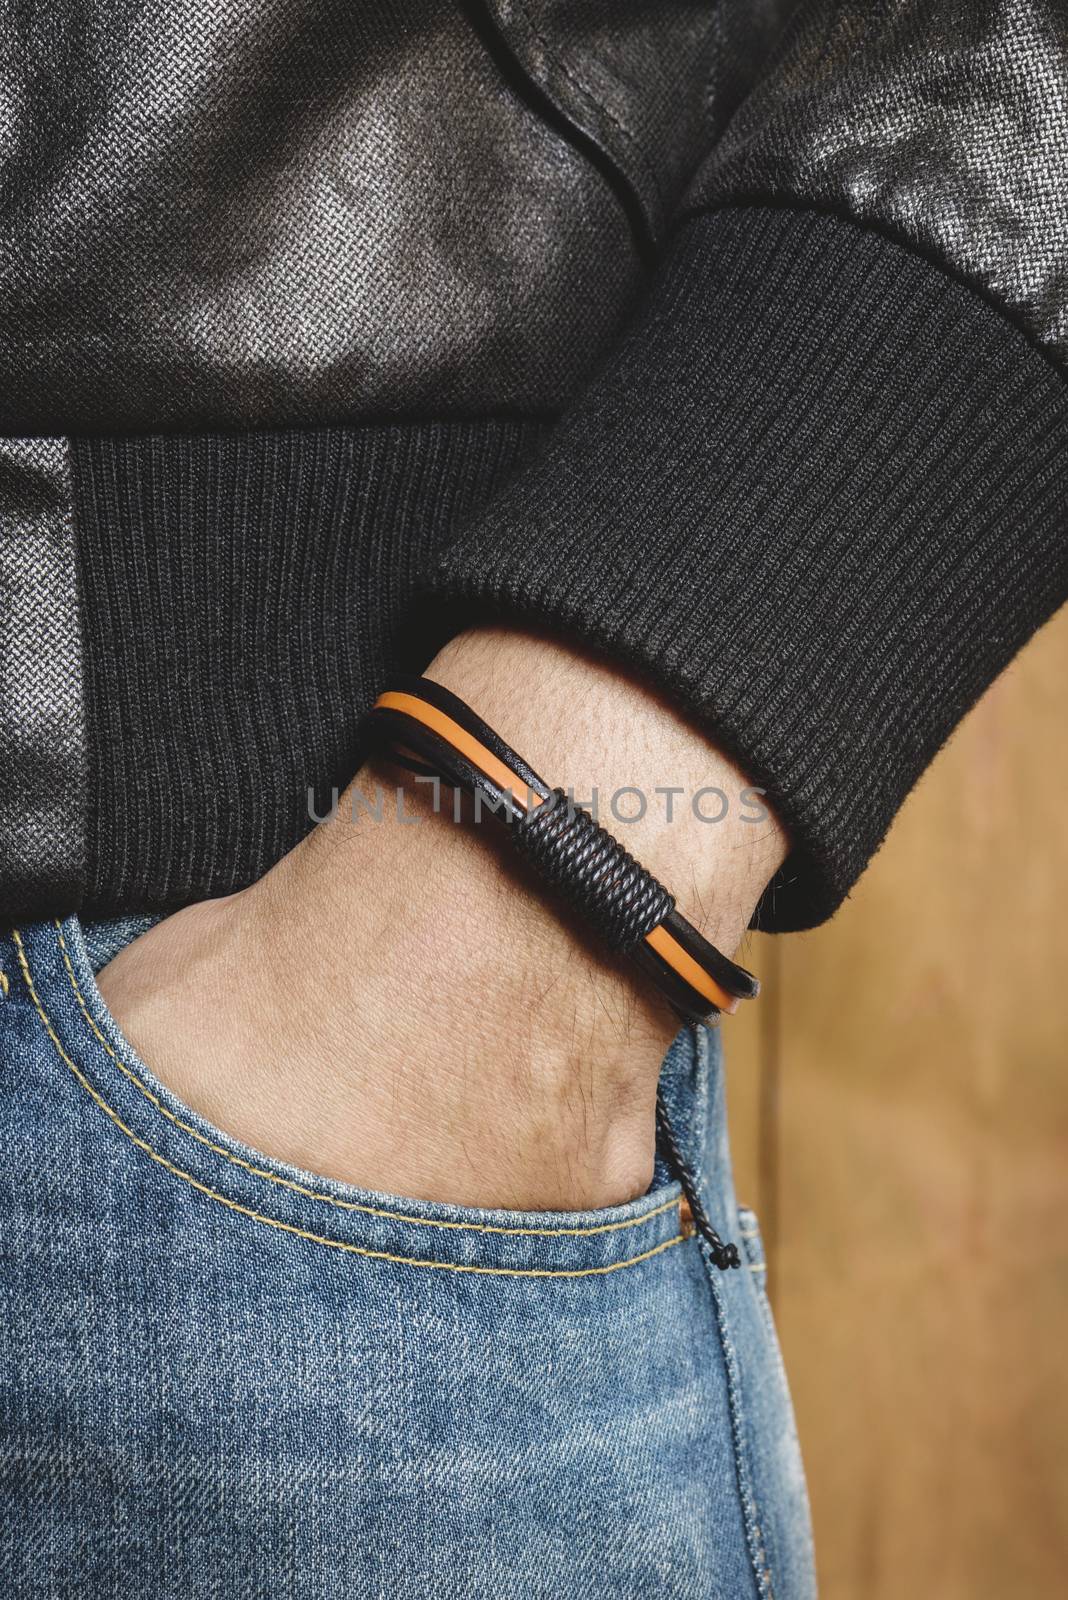 closeup leather bracelet on man's wrist